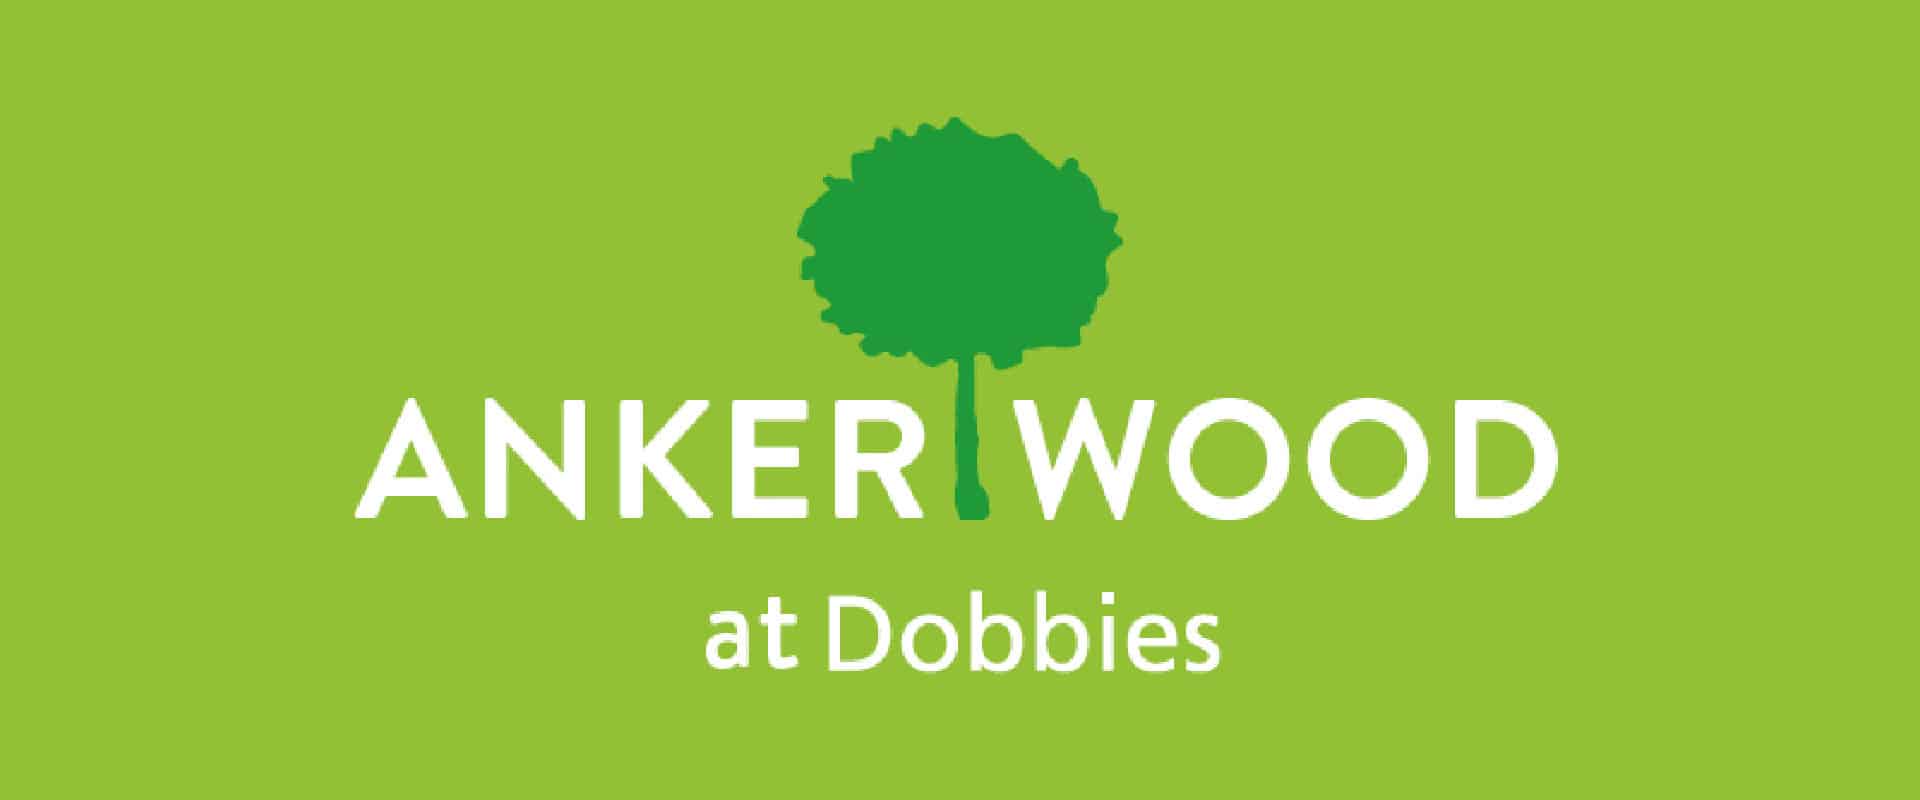 Anker Wood in UK